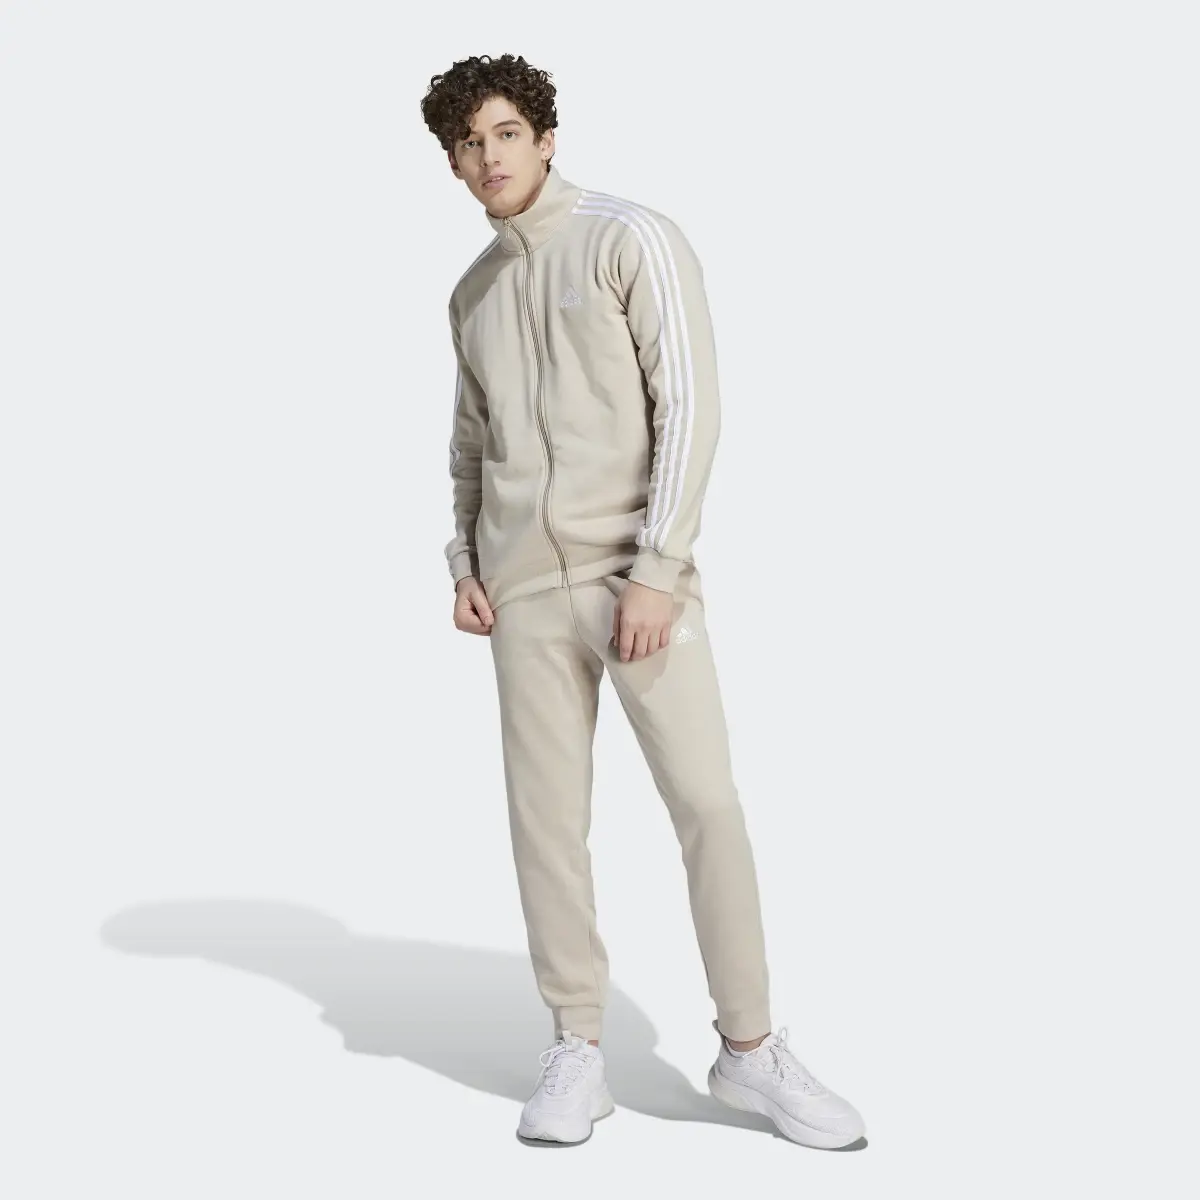 Adidas Basic 3-Stripes Fleece Track Suit. 2